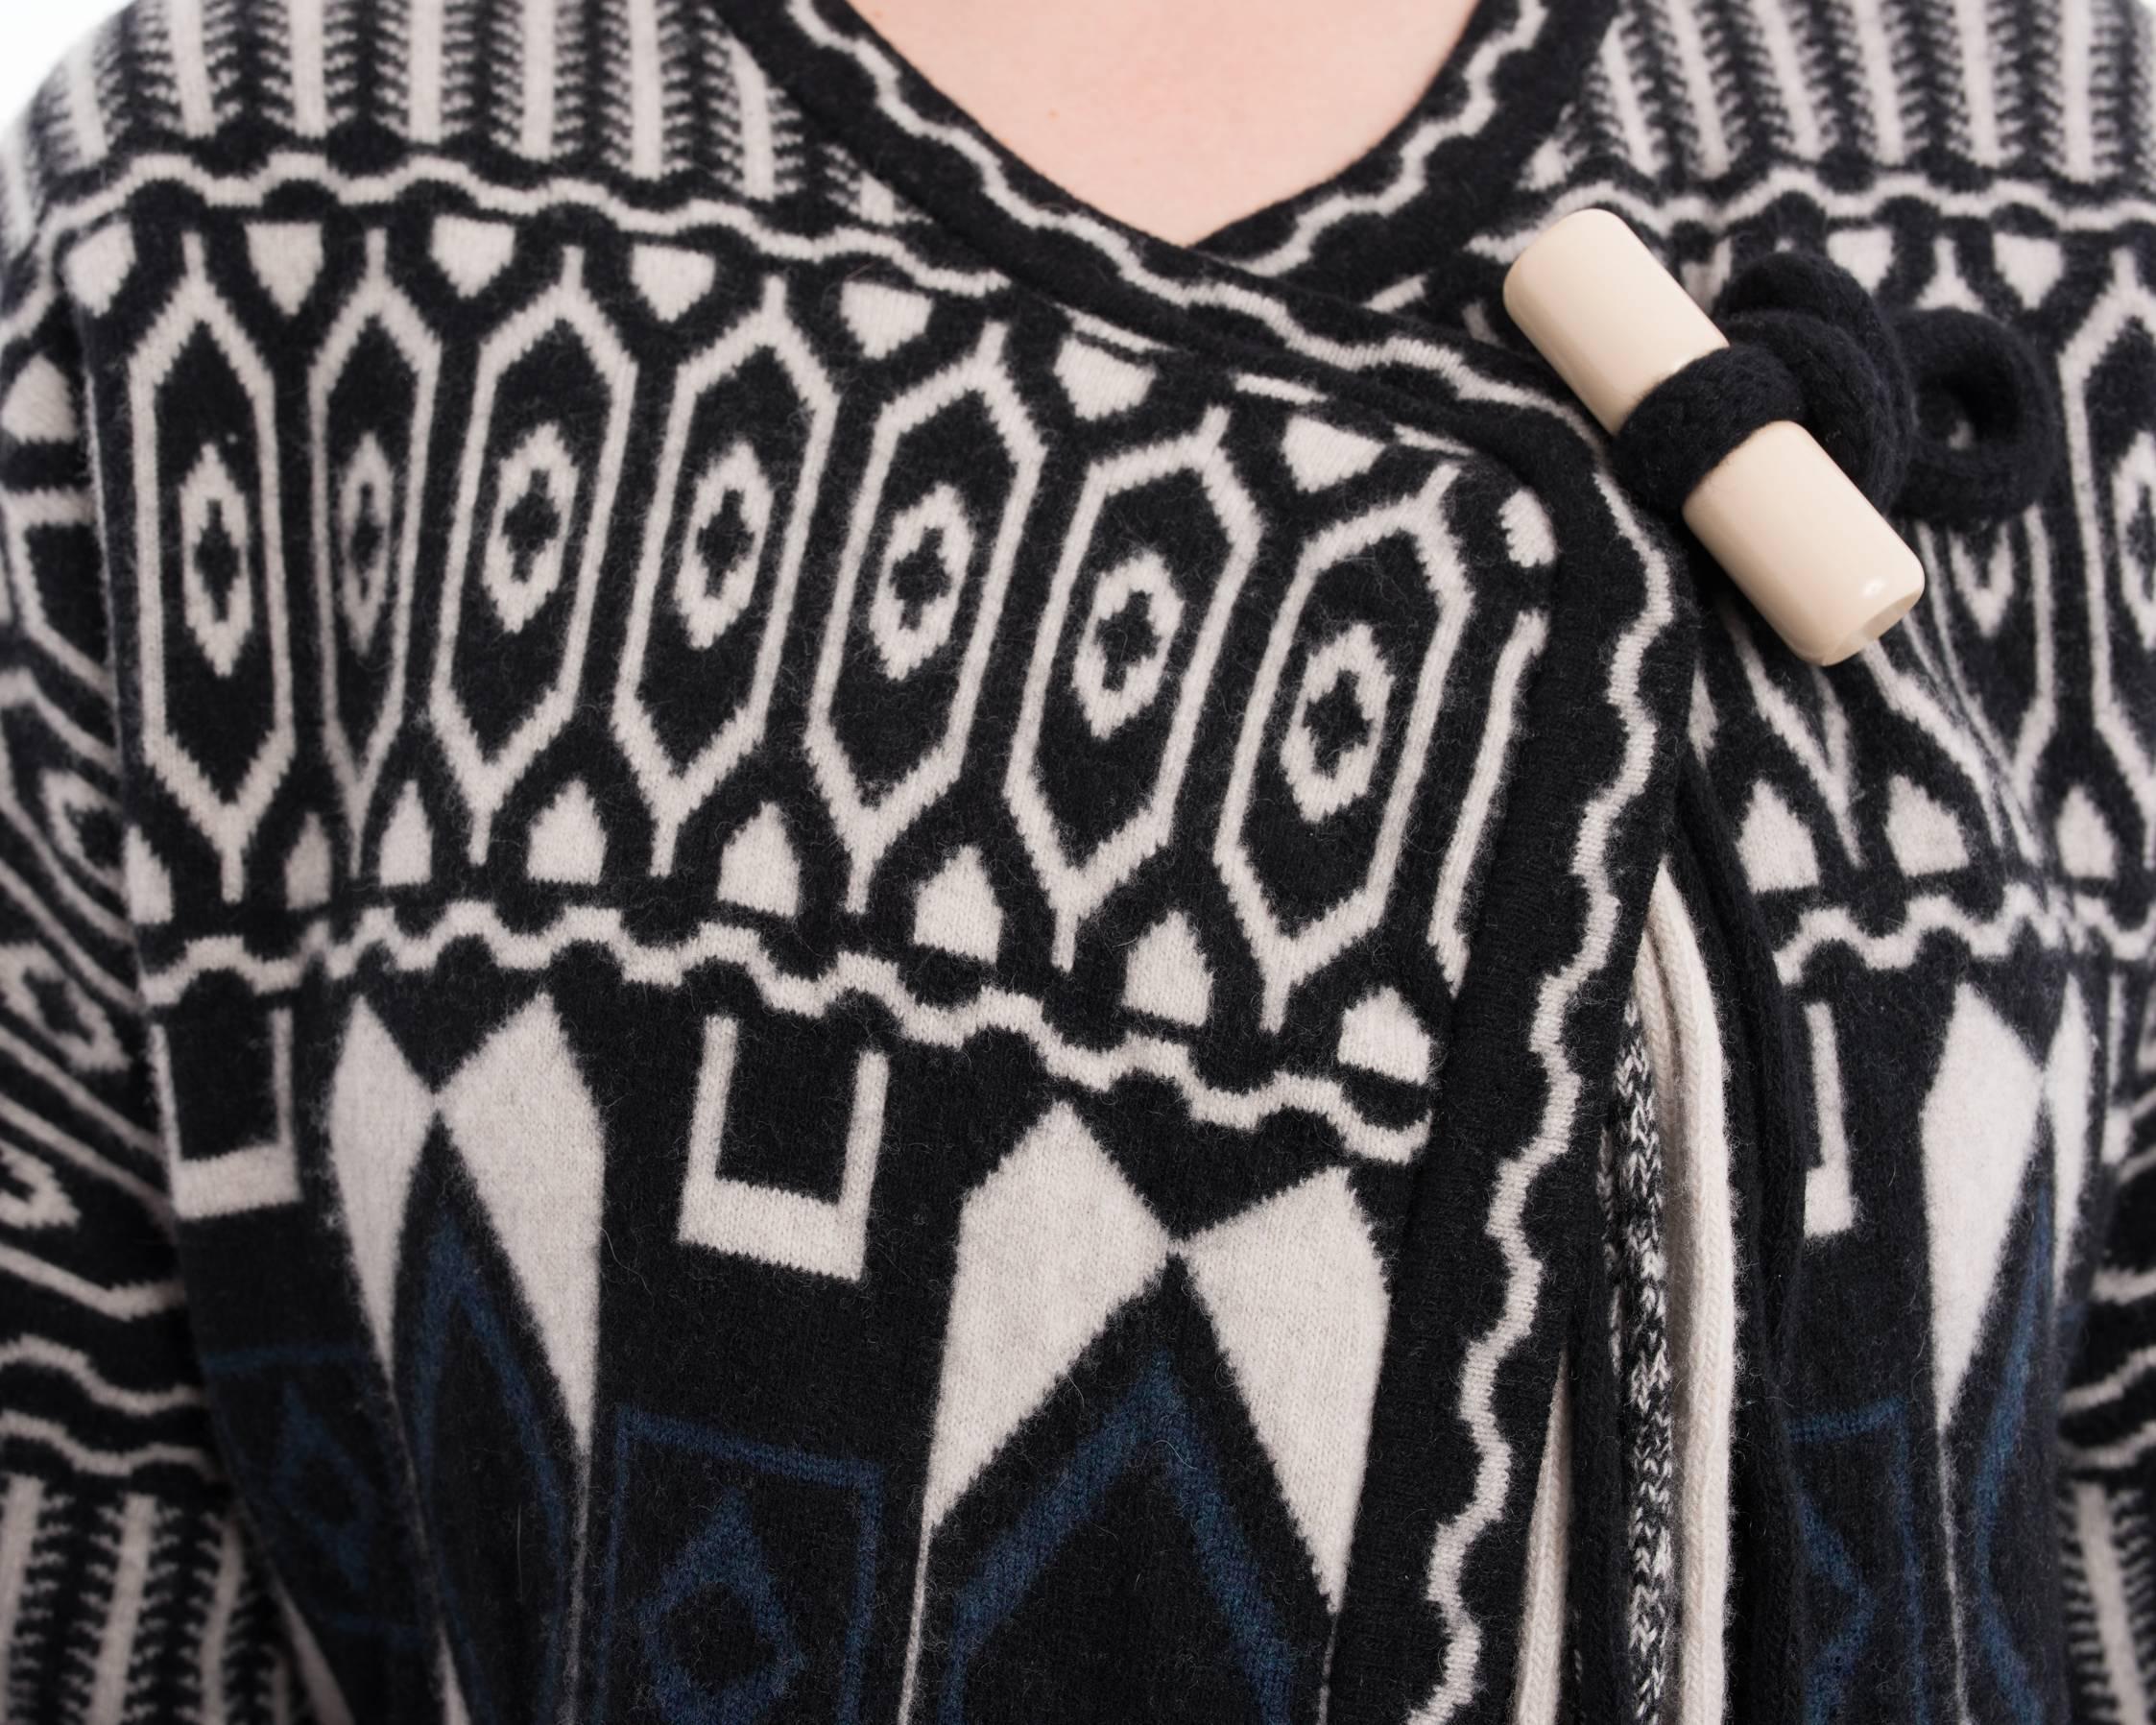 Chloe Pre-Fall 2015 Black Navy White Wool Toggle Sweater - 6 3